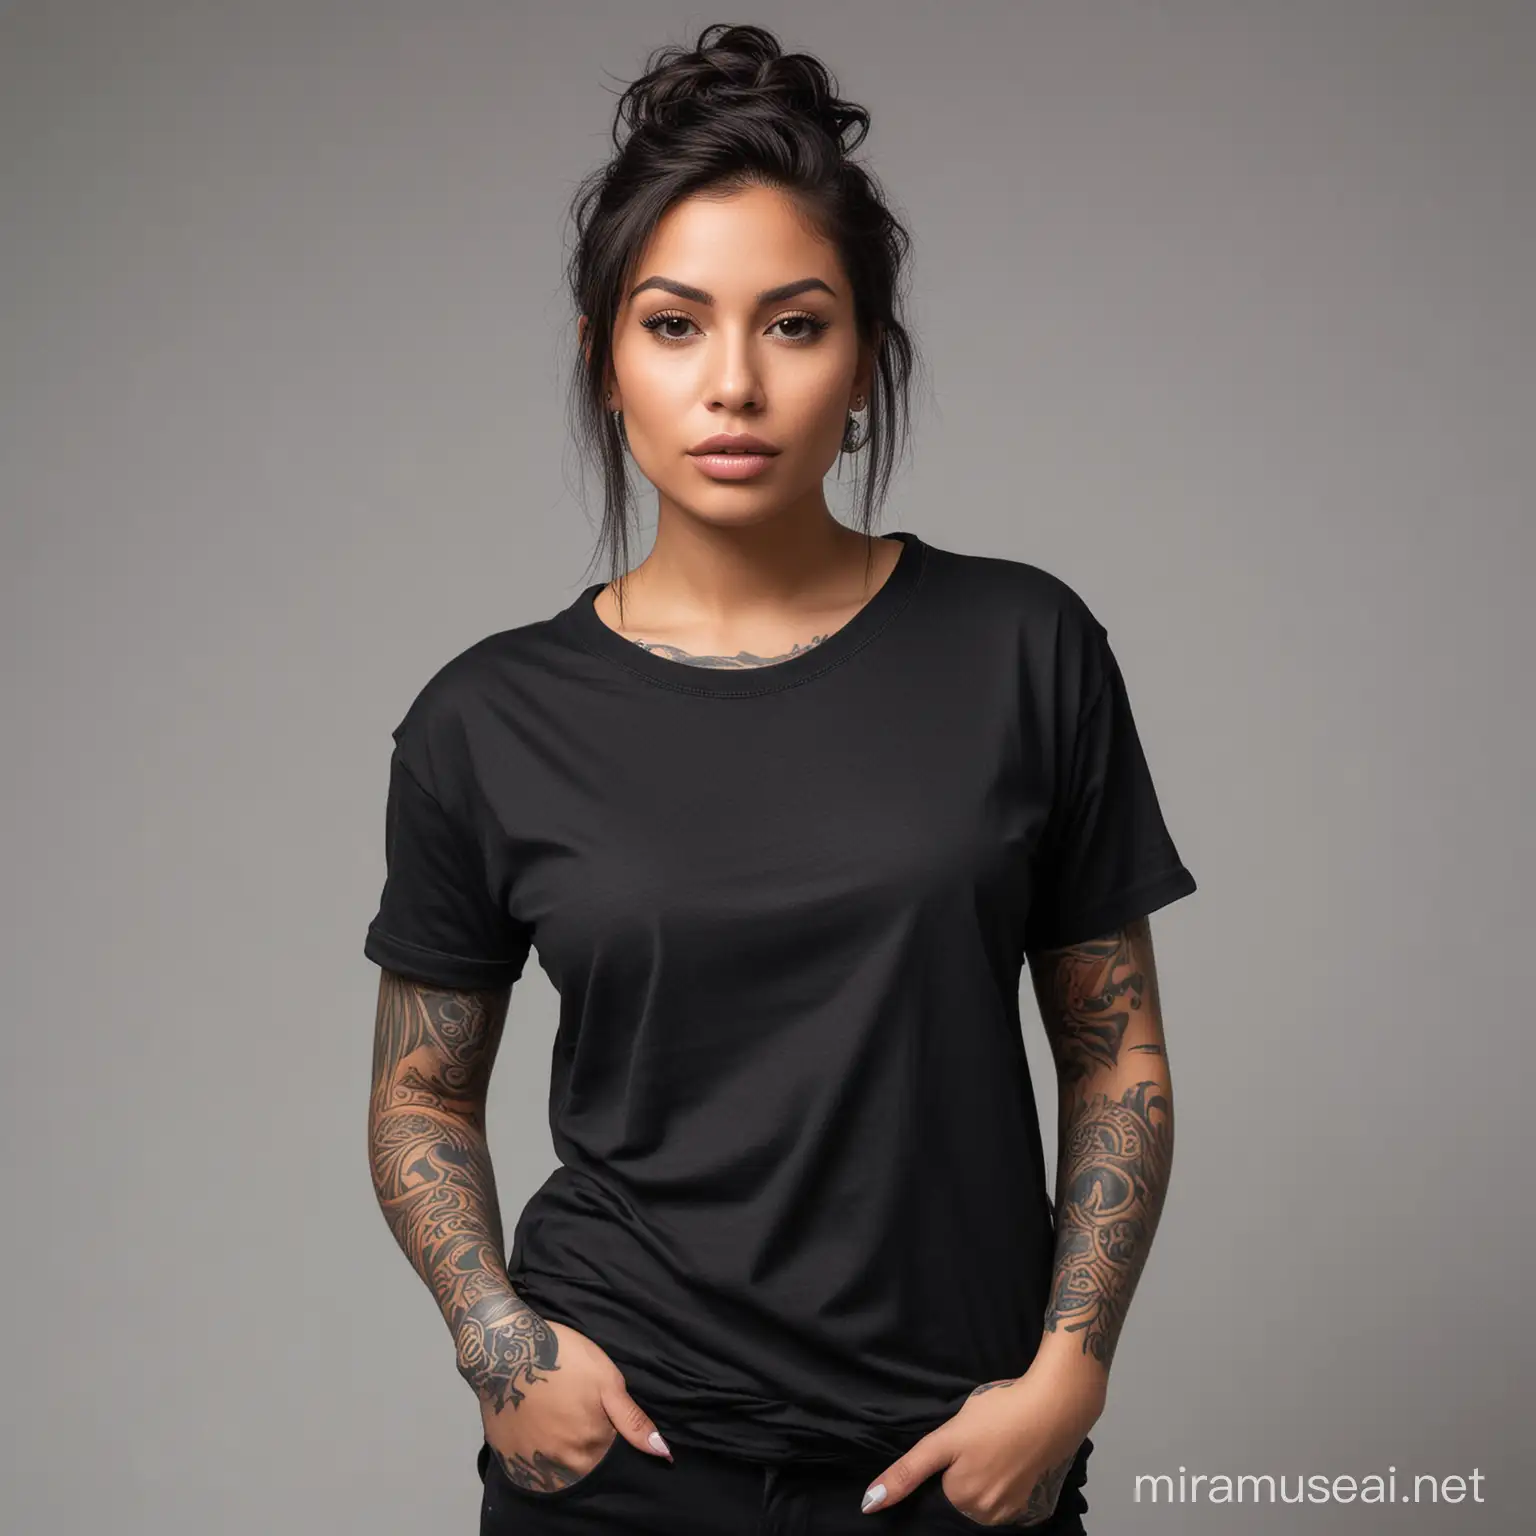 Stylish Latina Model in Oversized Black TShirt